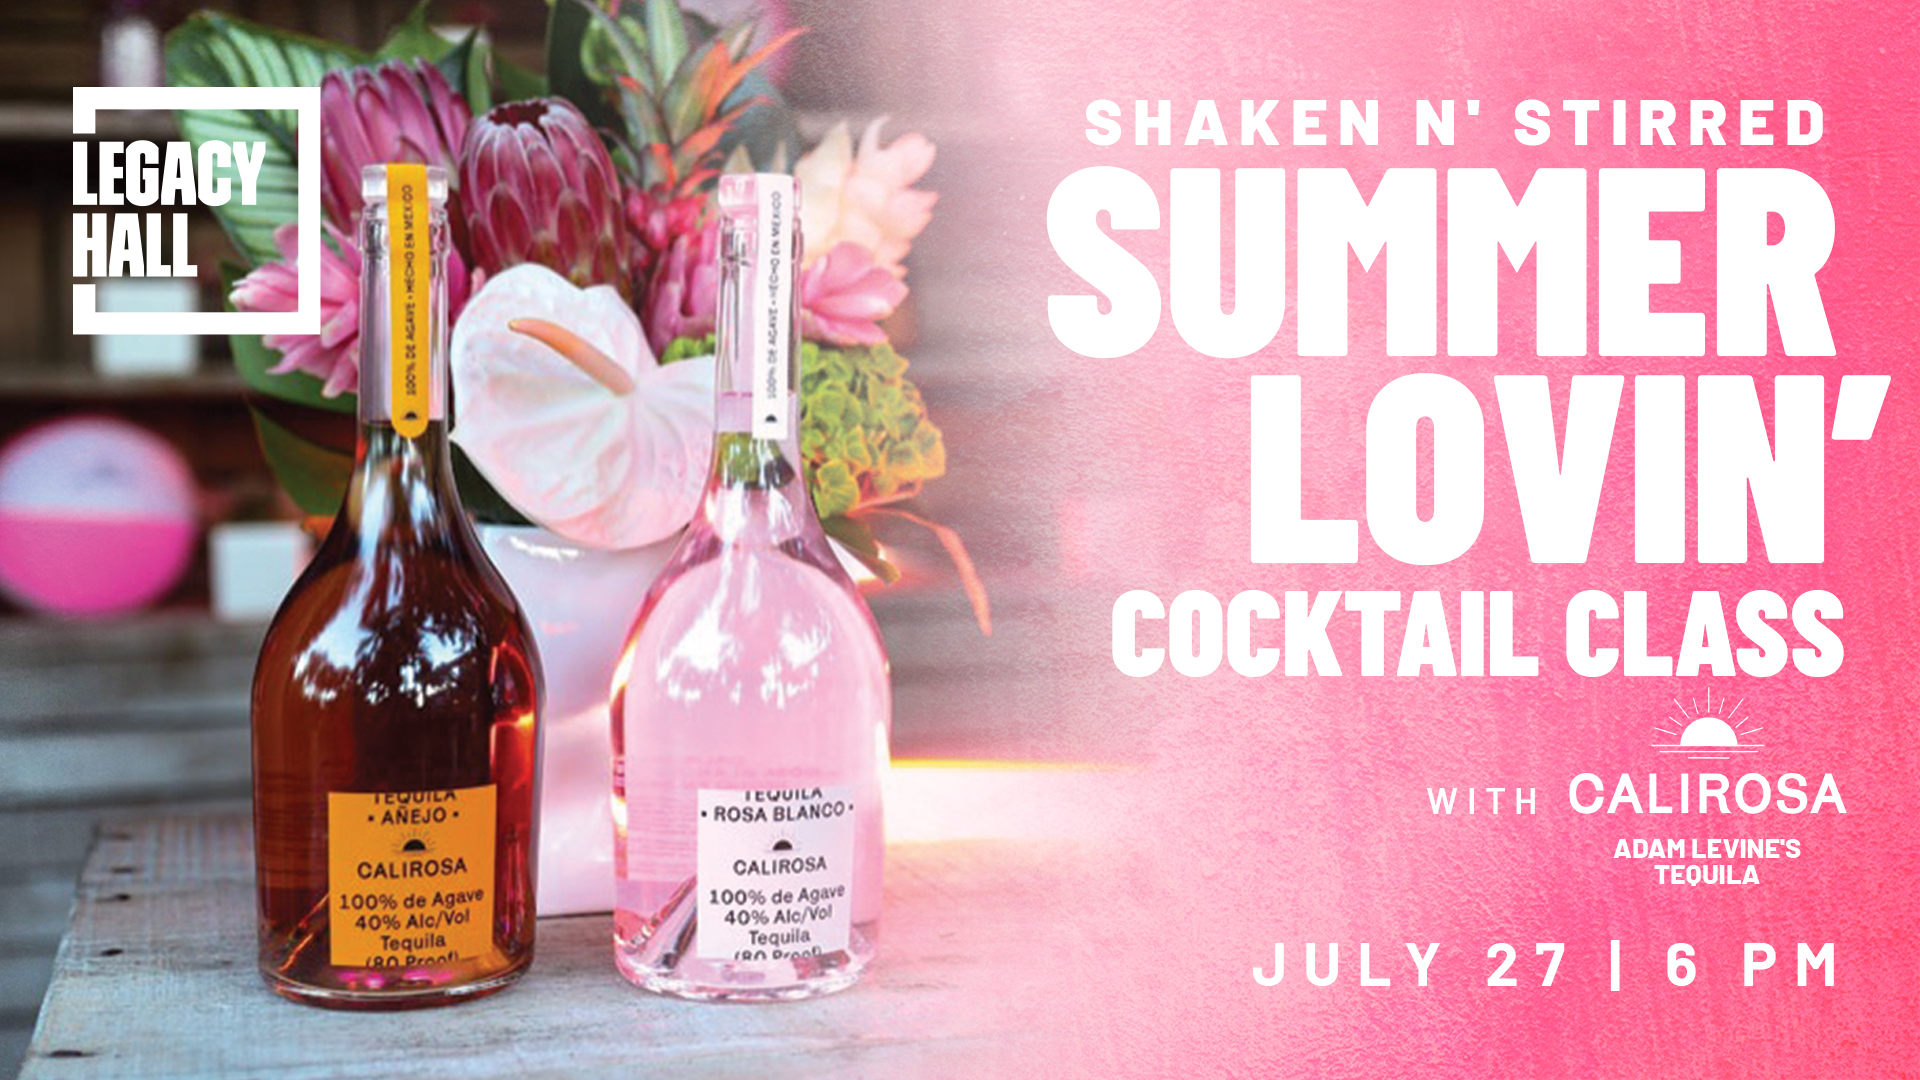 Shaken N’ Stirred: Summer Lovin’ Cocktail Class - hero